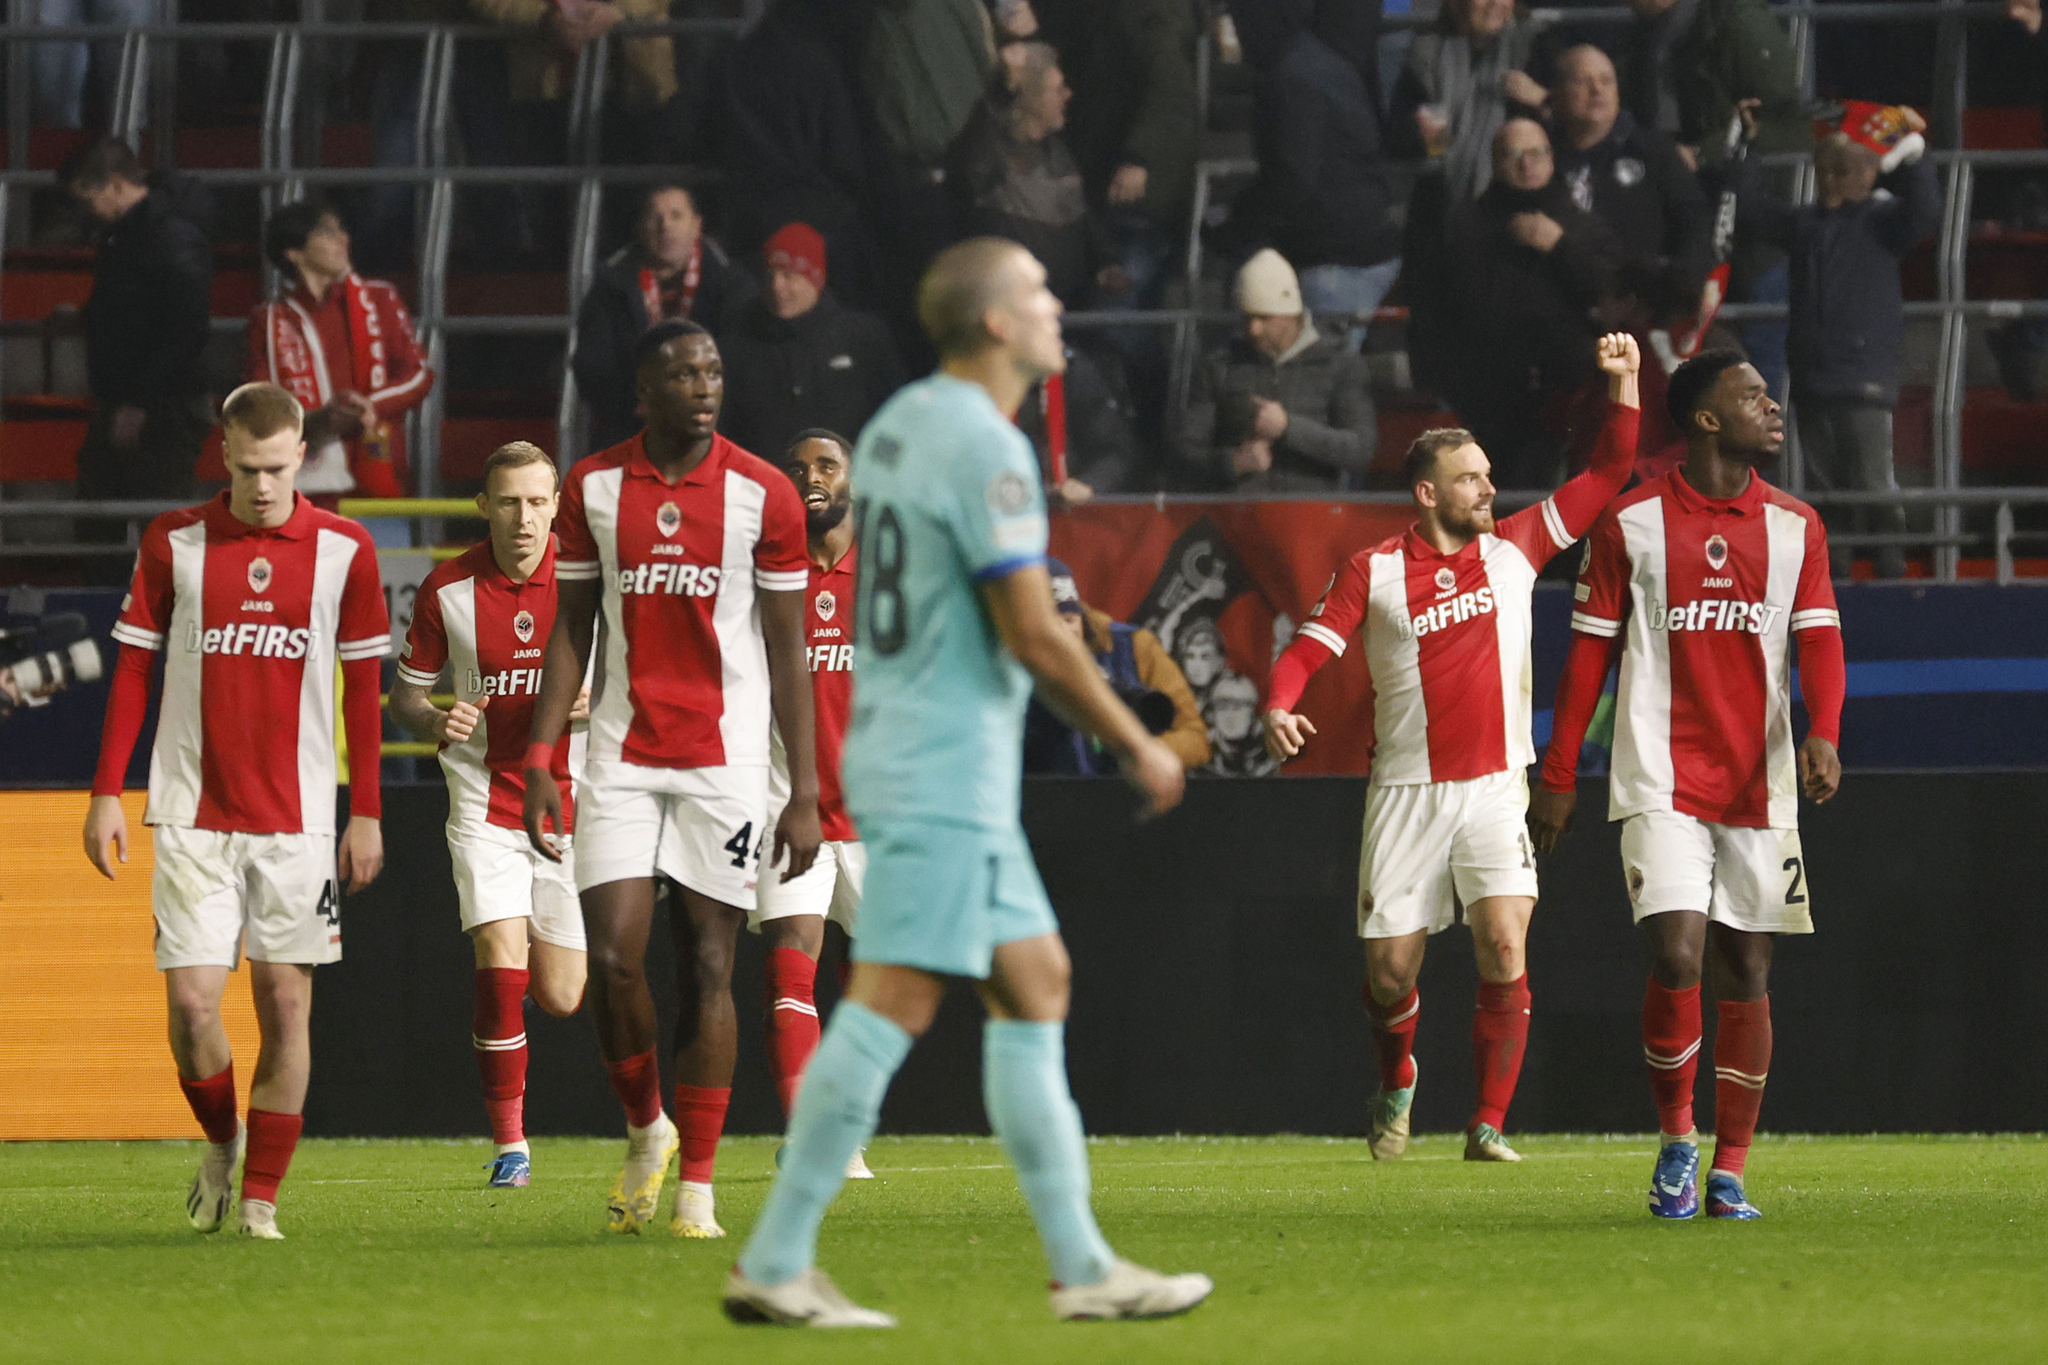 Antwerps Vincent Janssen celebrates with teammates after scoring